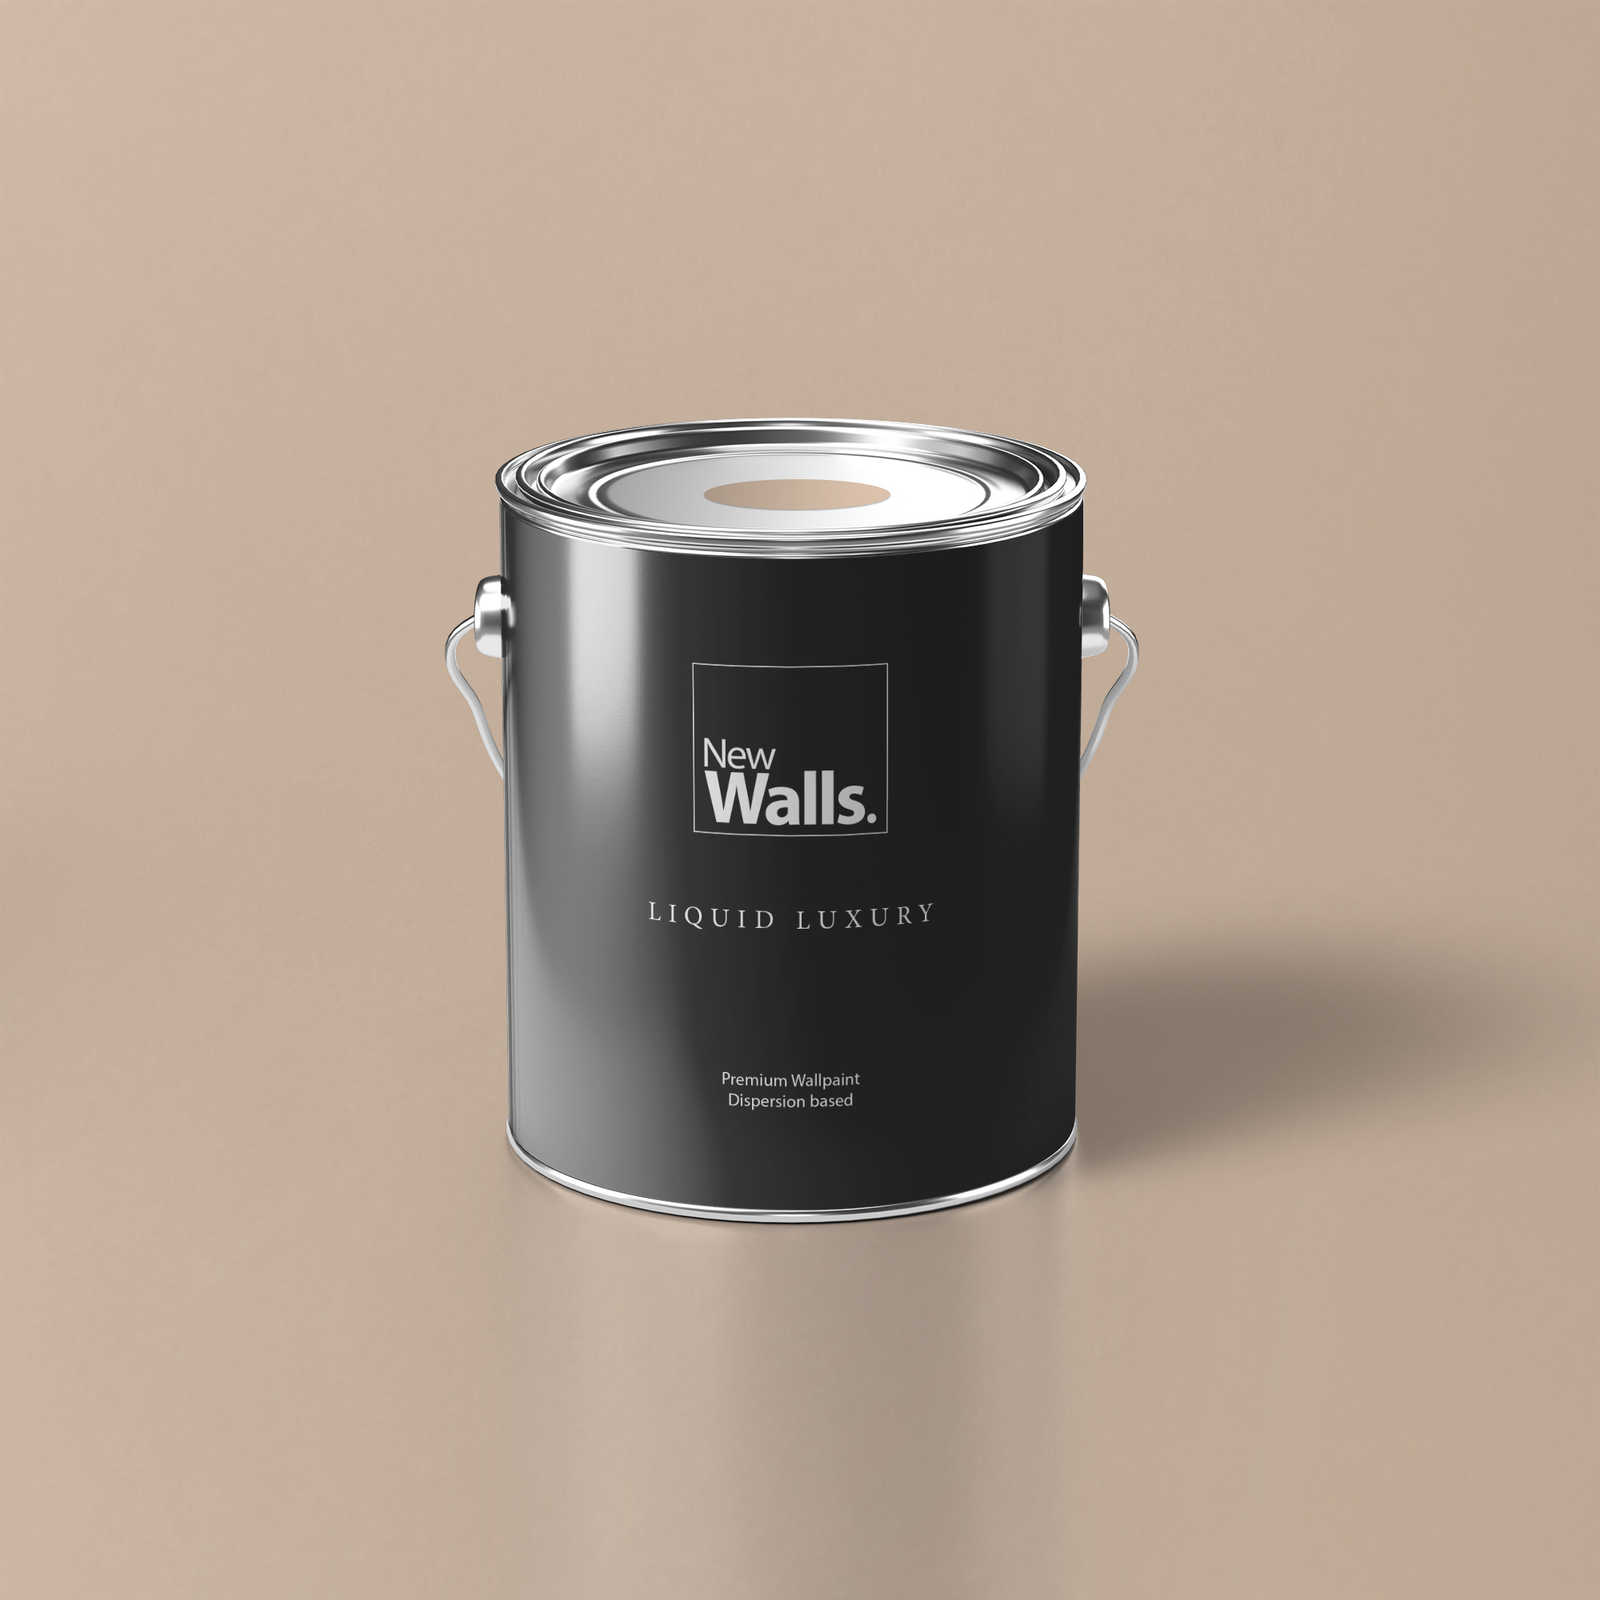 Premium Wall Paint Refreshing Light Beige »Boho Beige« NW724 – 5 litre
